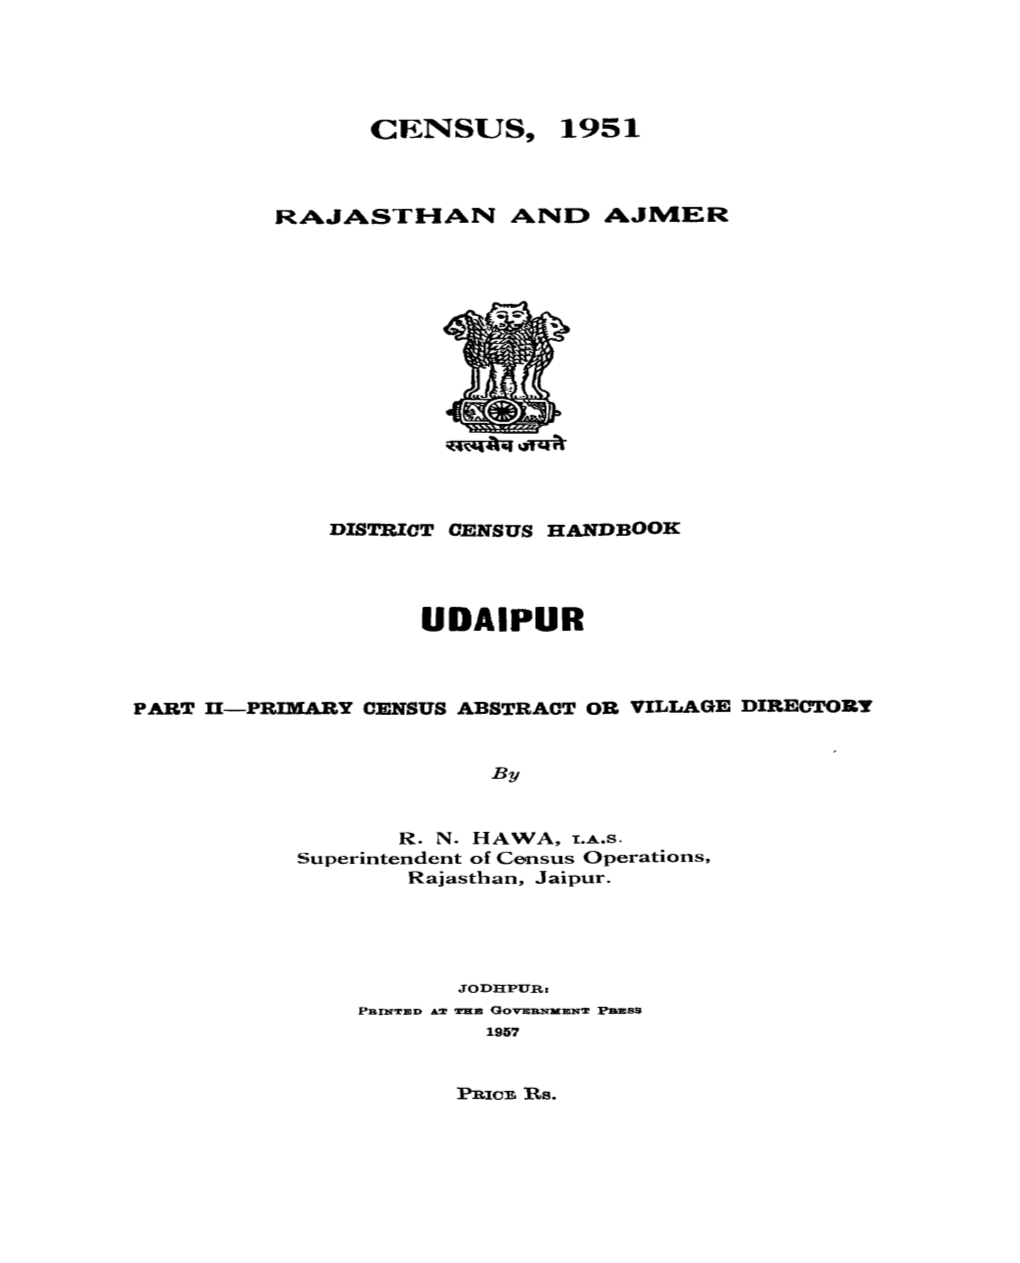 District Census Handbook, Udaipur, Rajasthan and Ajmer